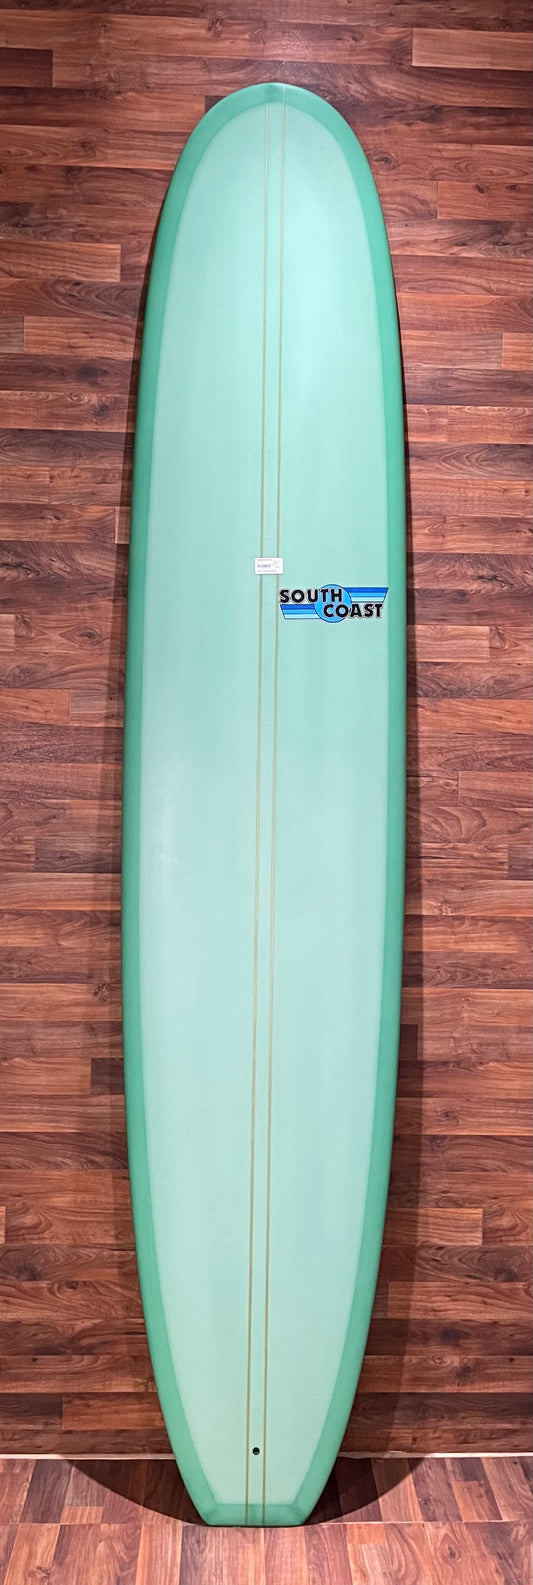 South Coast Tall Can 9'4" Surfboard